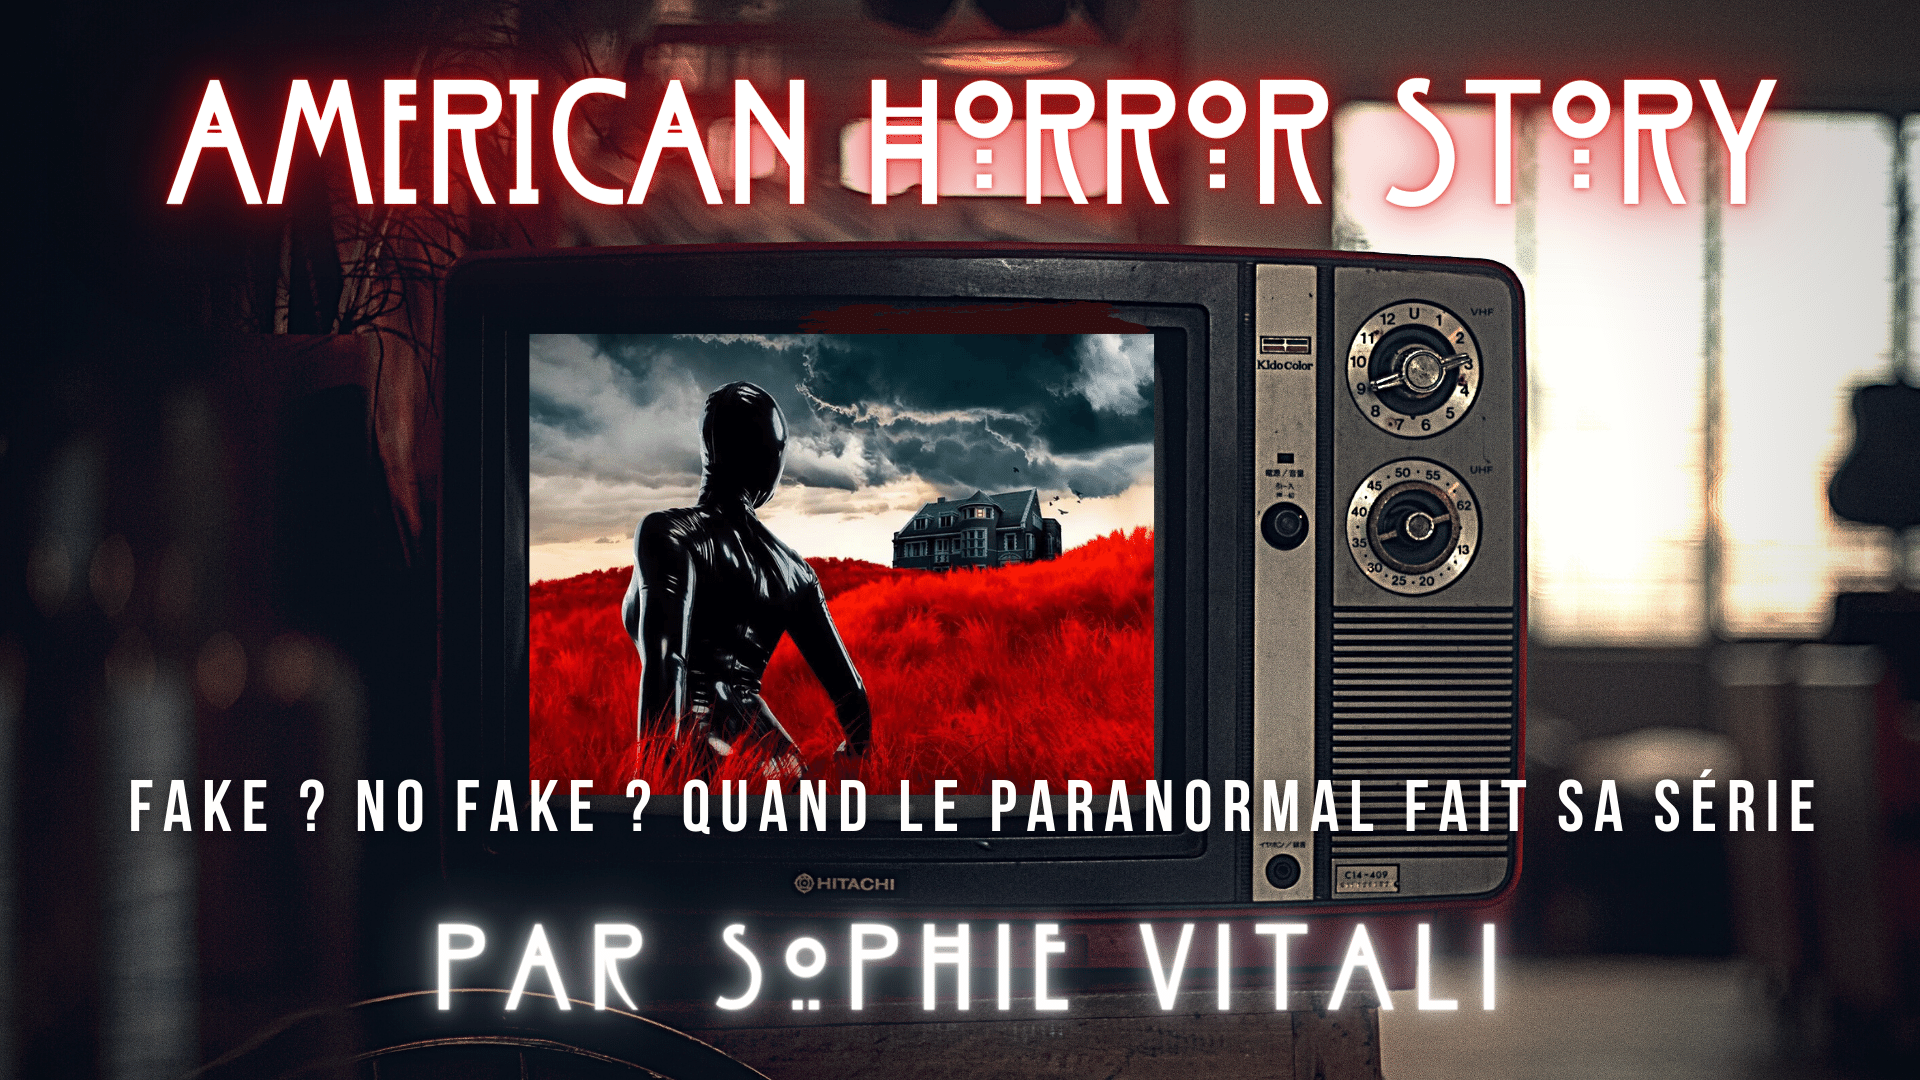 American Horror Story avec Sophie Vitali médium et experte du paranormal